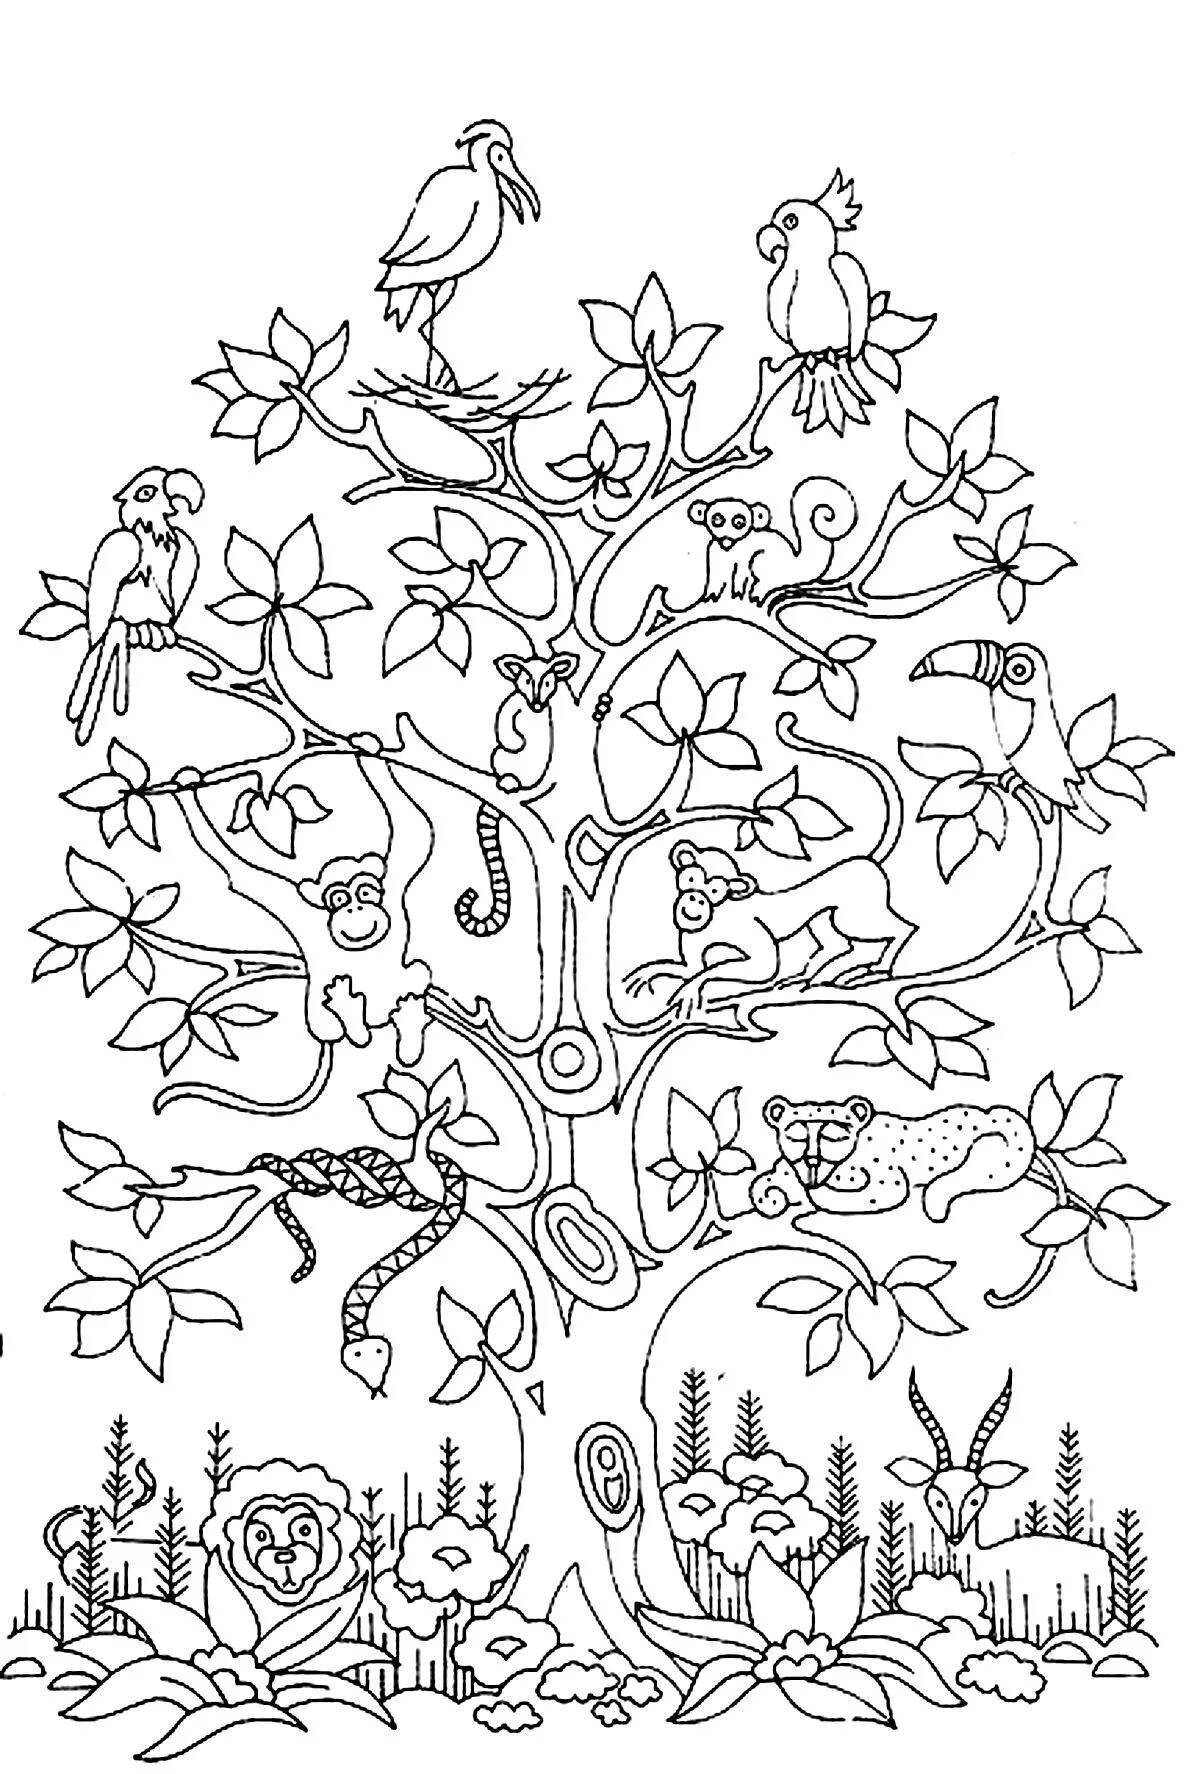 Coloring book wonderful Chukovsky tree